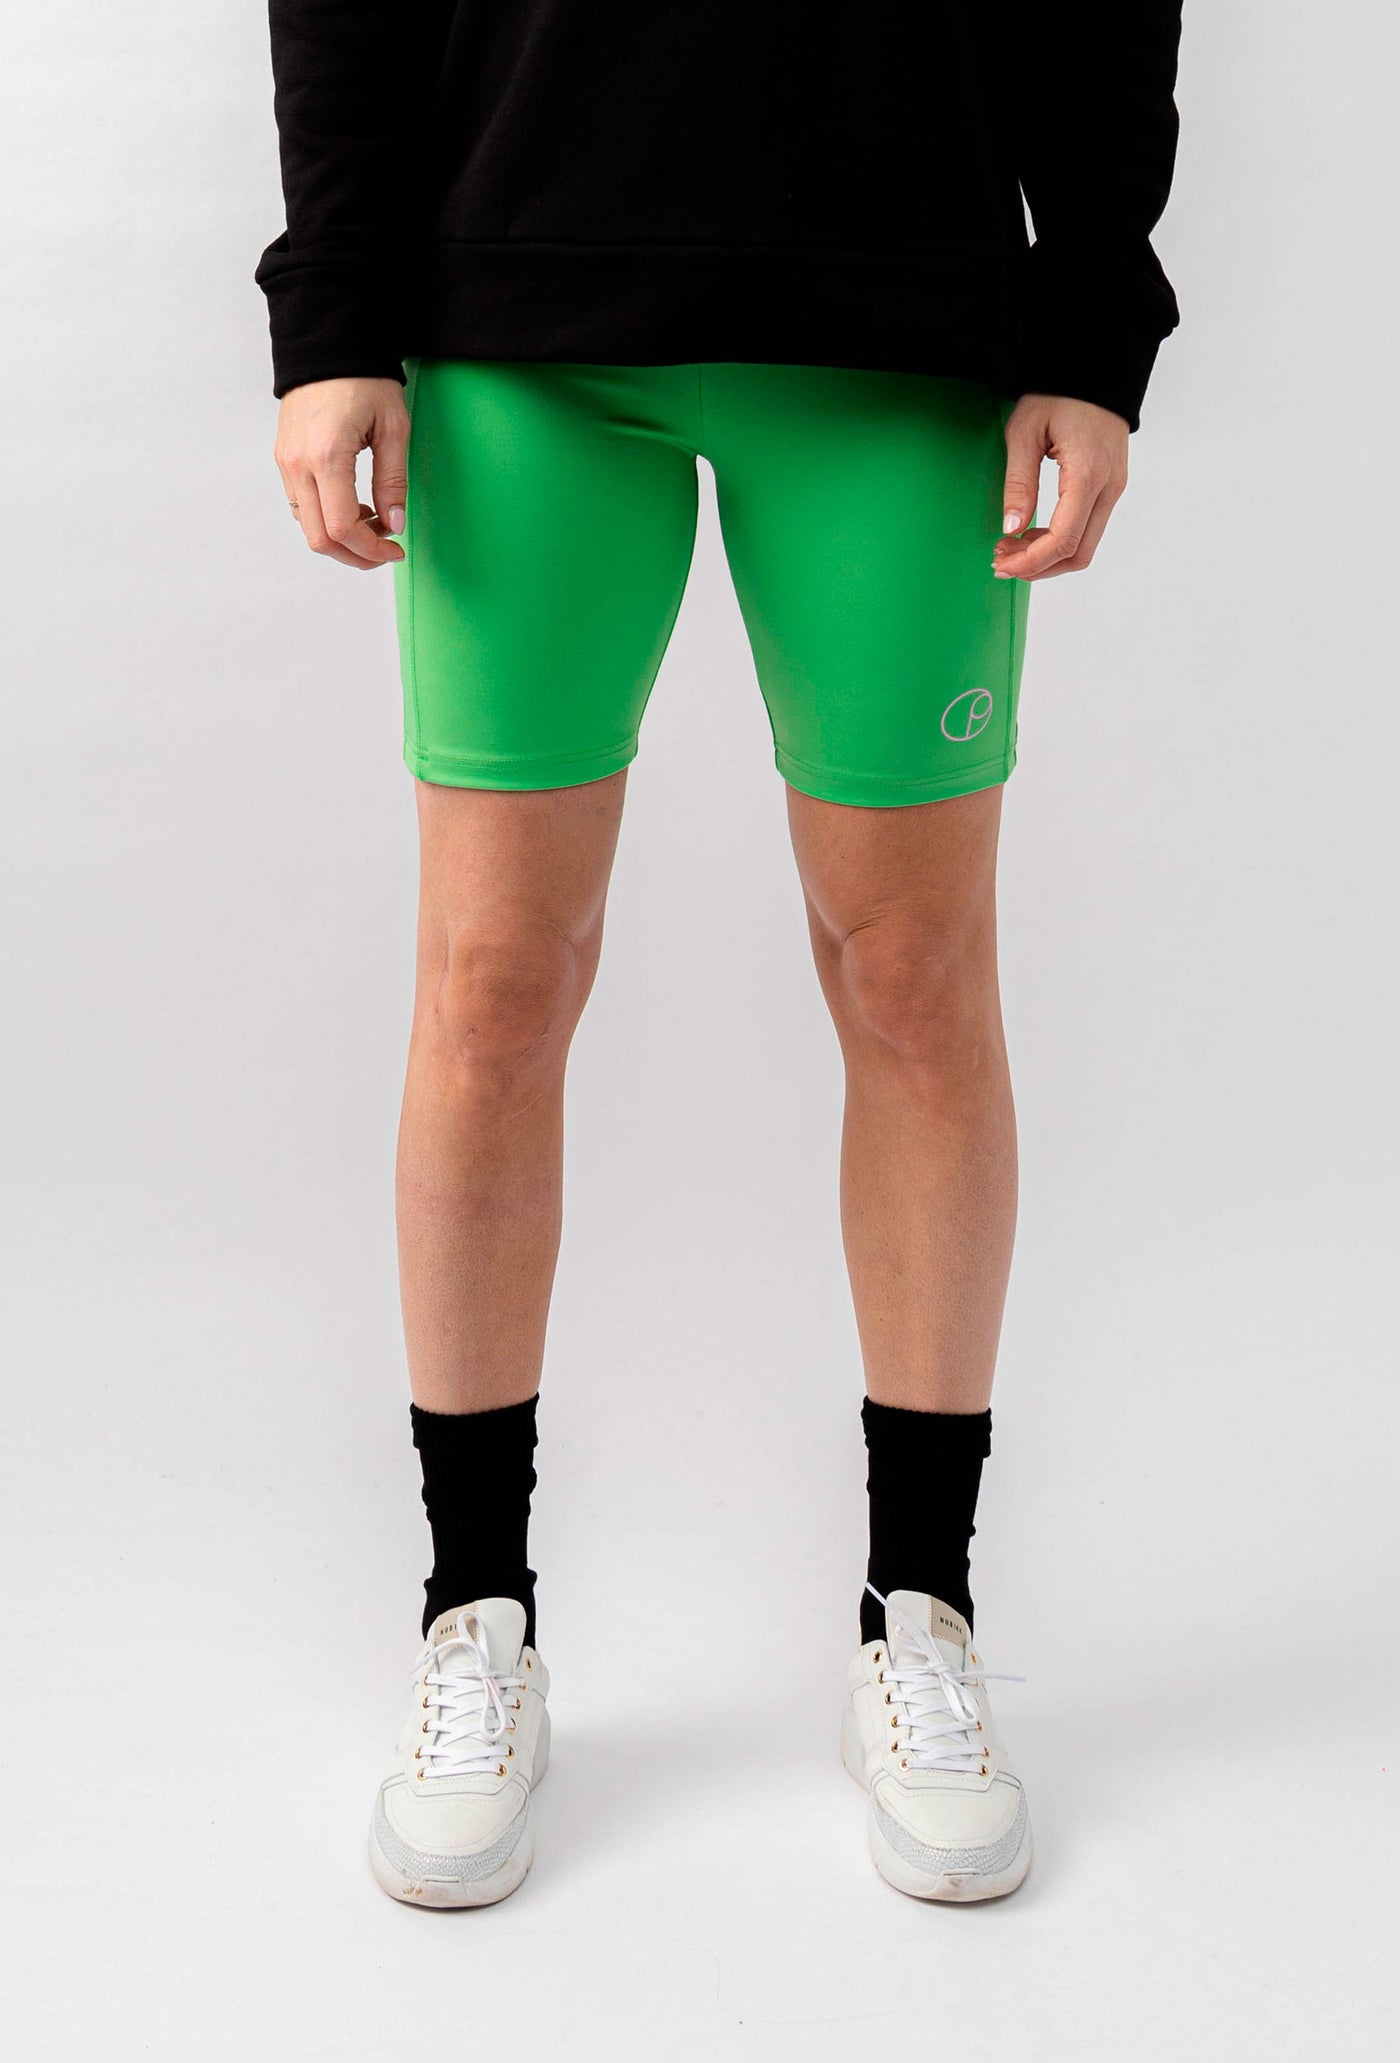 Polman Bike Shorts Leggings 614 Fresh Green